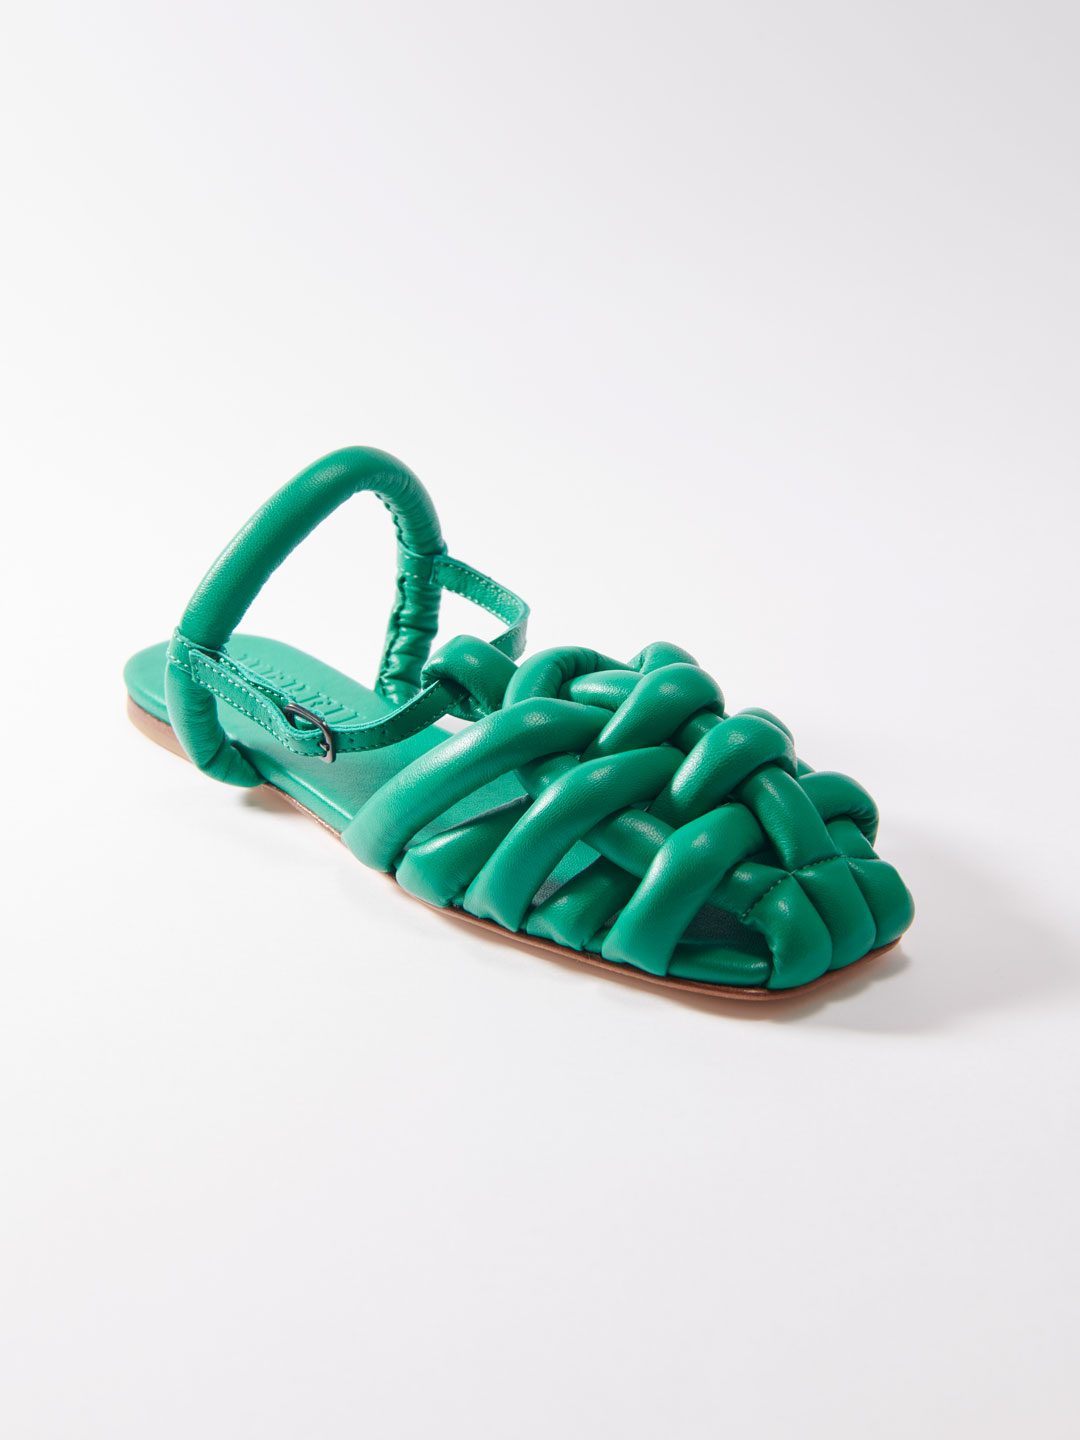 Cabersa Padded Fisheman Sandals - Green